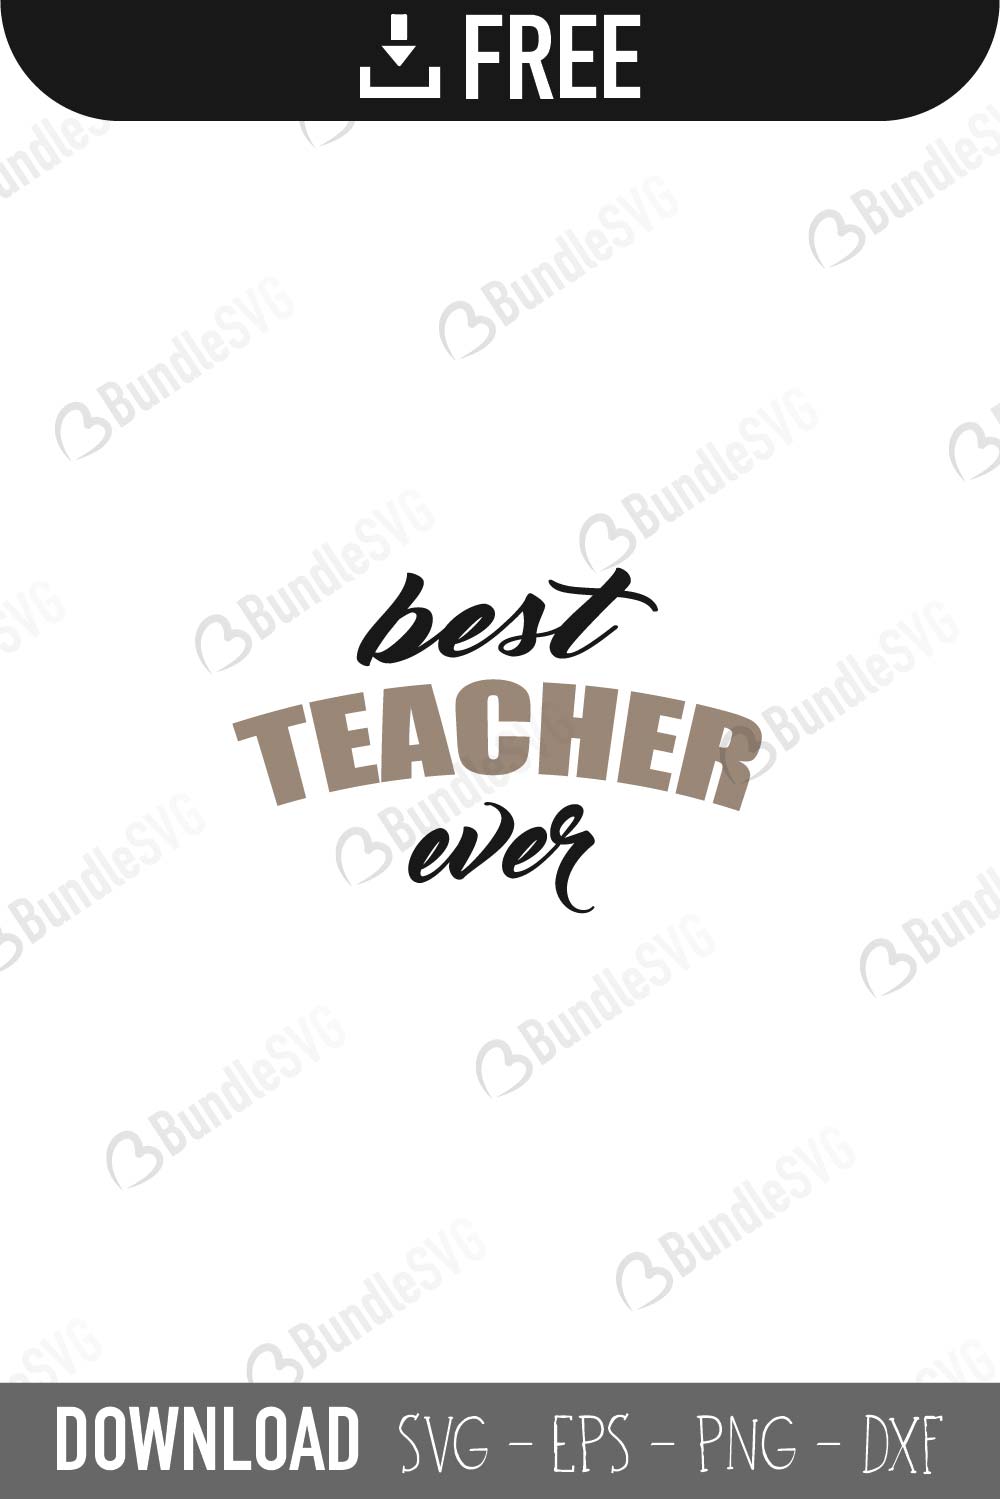 Download Best Teacher Ever Svg Cut Files Bundlesvg